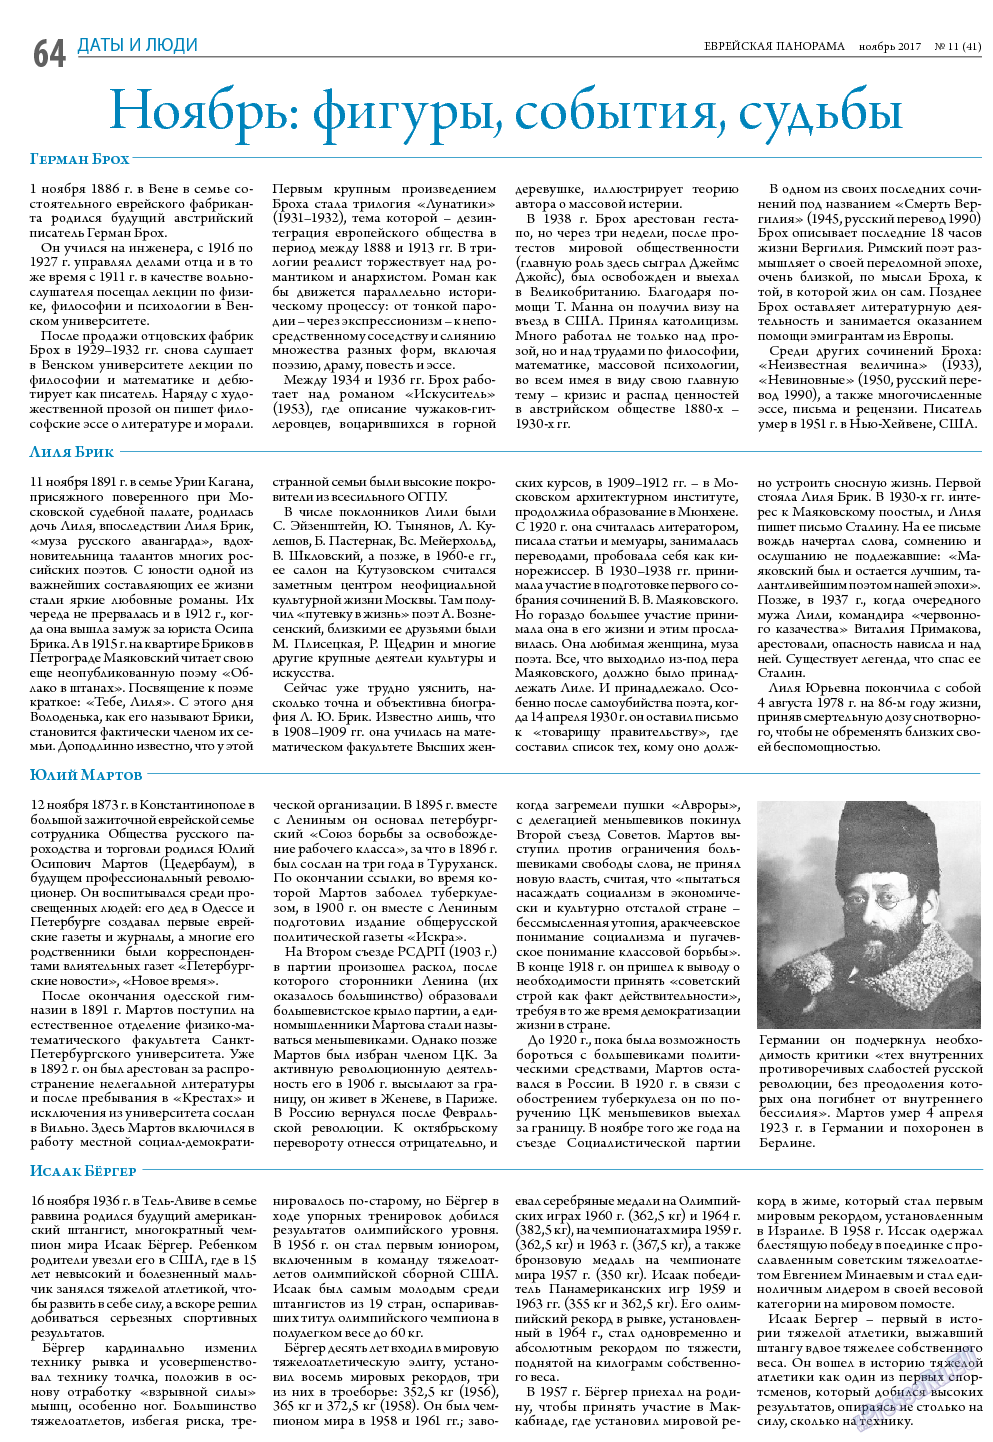 Еврейская панорама, газета. 2017 №11 стр.64